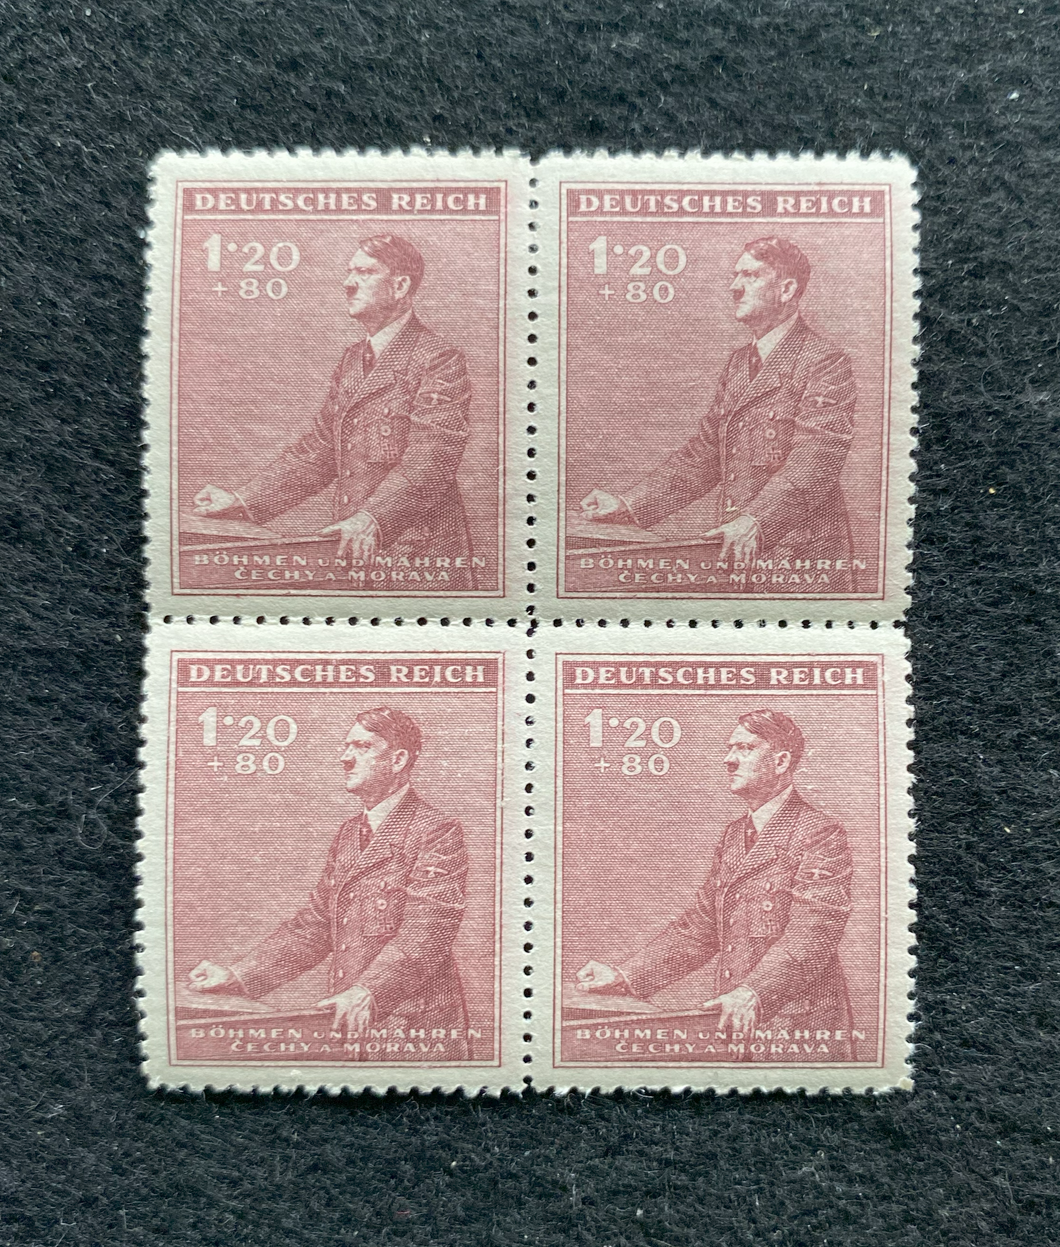 Antique WWII Unused German Nazi Third Reich Hitler 4 X 1.20 Rp Stamps Block MNH